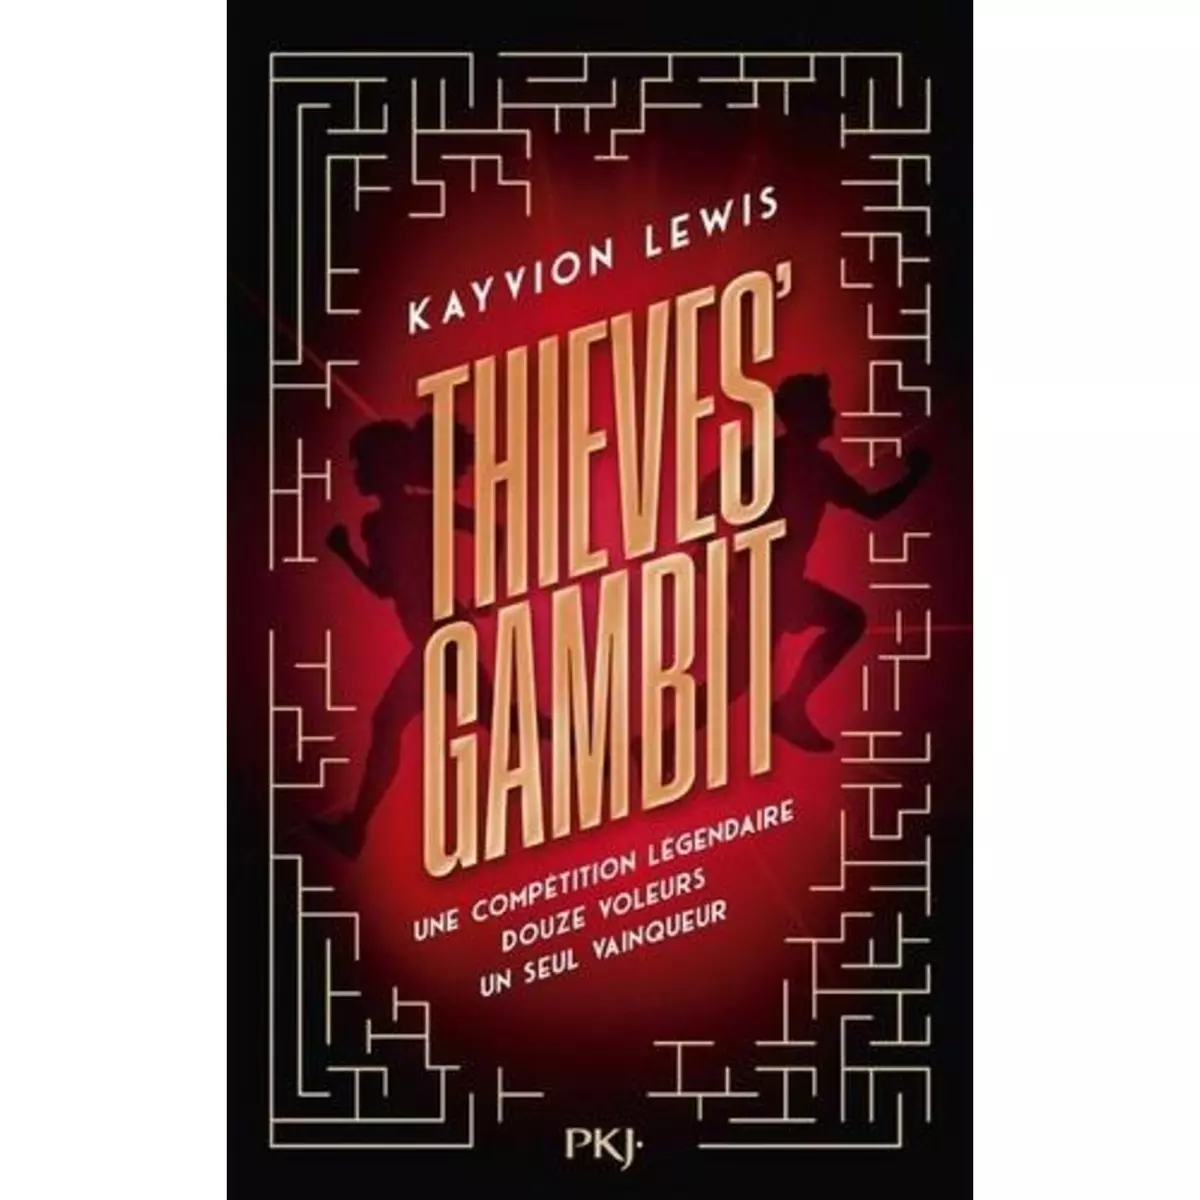  THIEVES' GAMBIT TOME 1 : VOLER A TOUT PERDRE, Lewis Kayvion